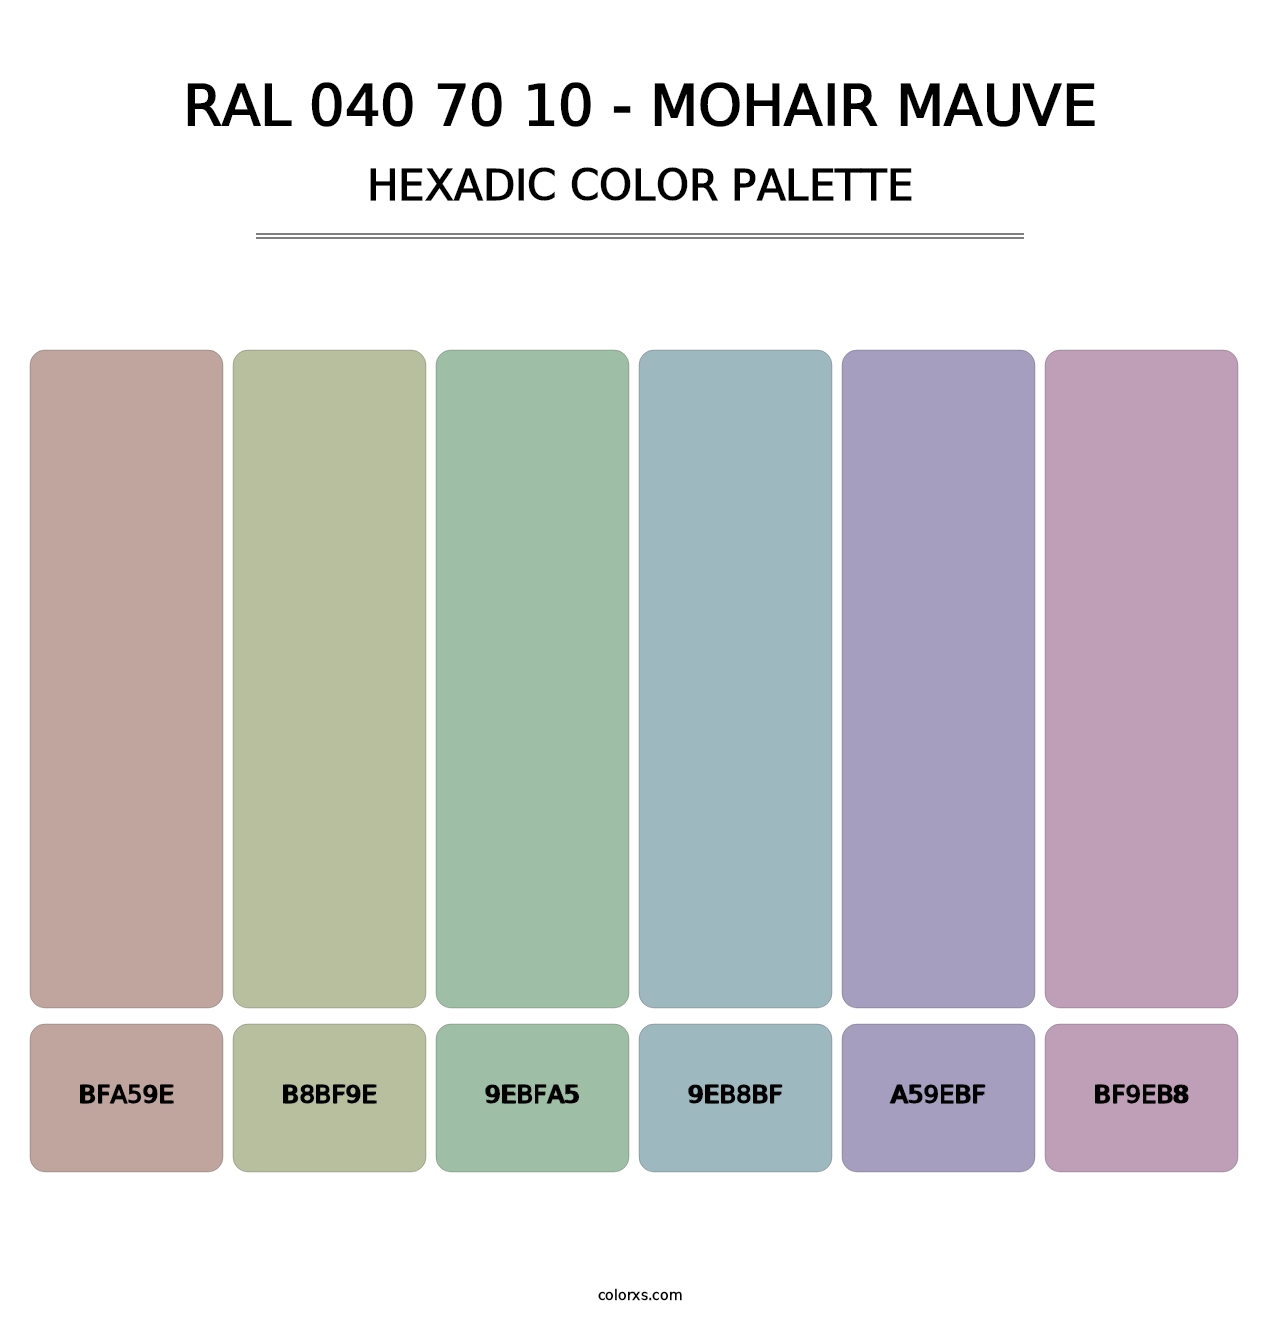 RAL 040 70 10 - Mohair Mauve - Hexadic Color Palette